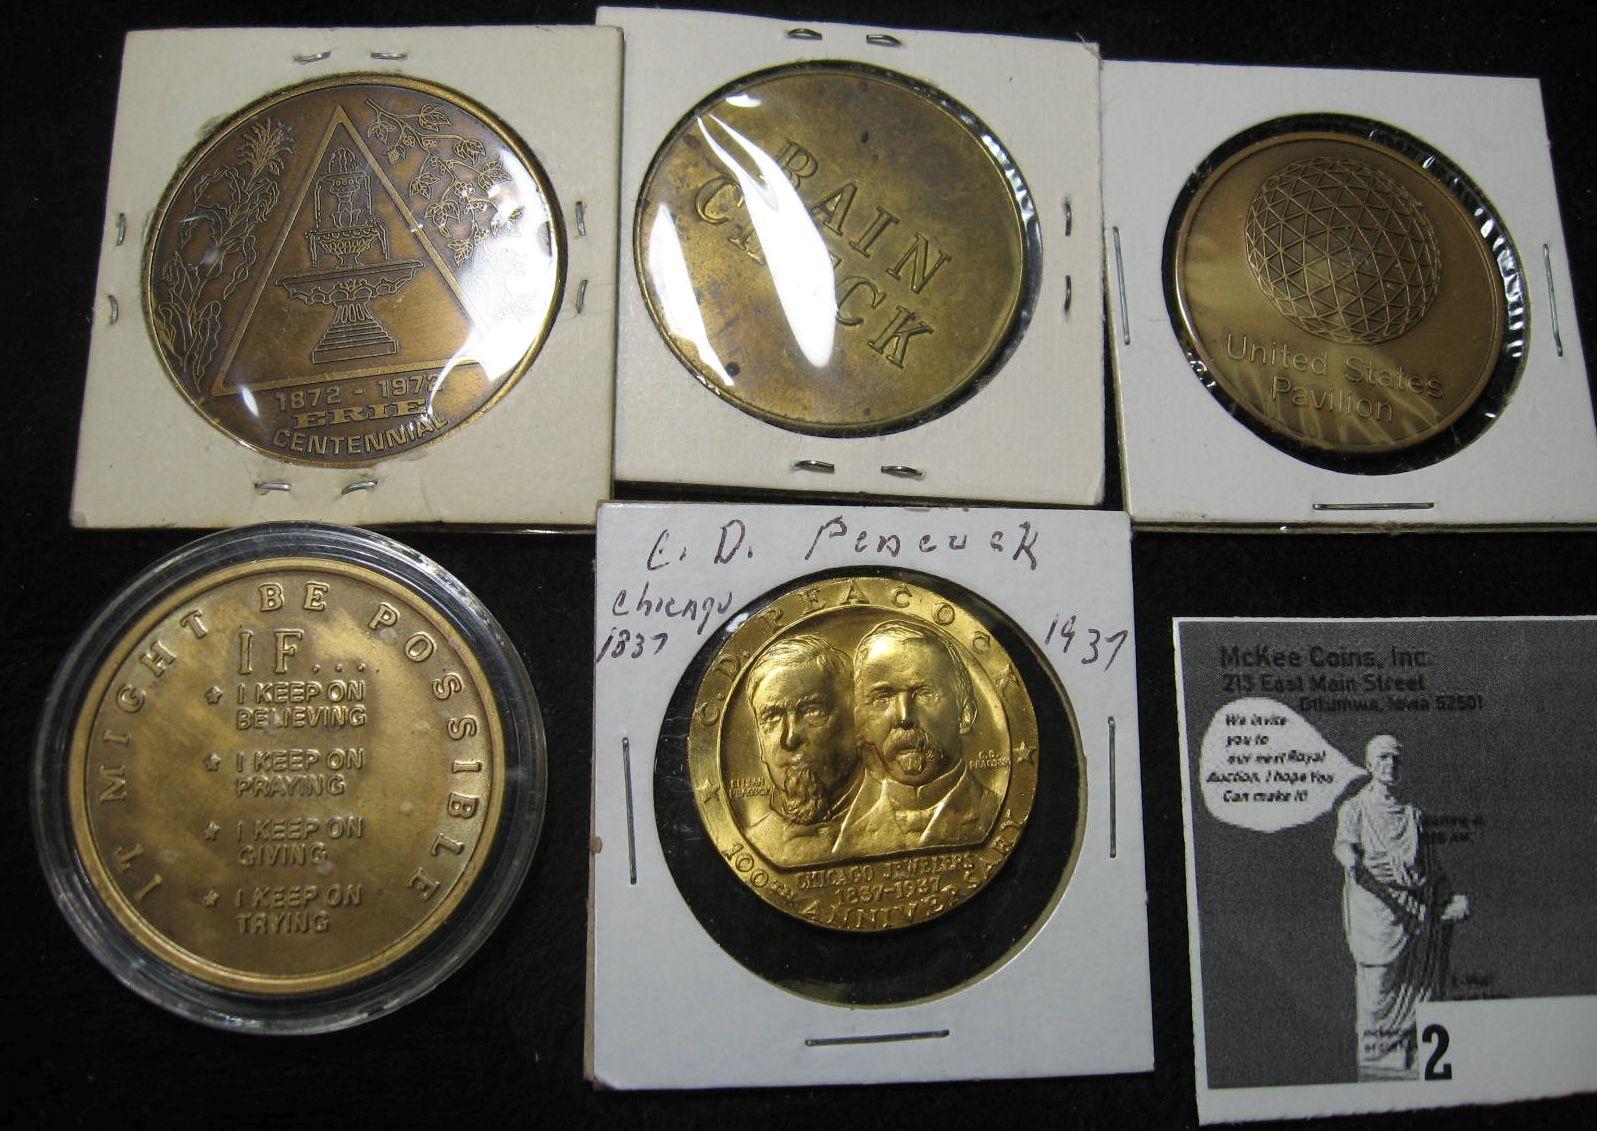 1872-1972 Erie, Illinois Centennial Medal; interesting RAIN CHECK; American Exchange Exchequer Club